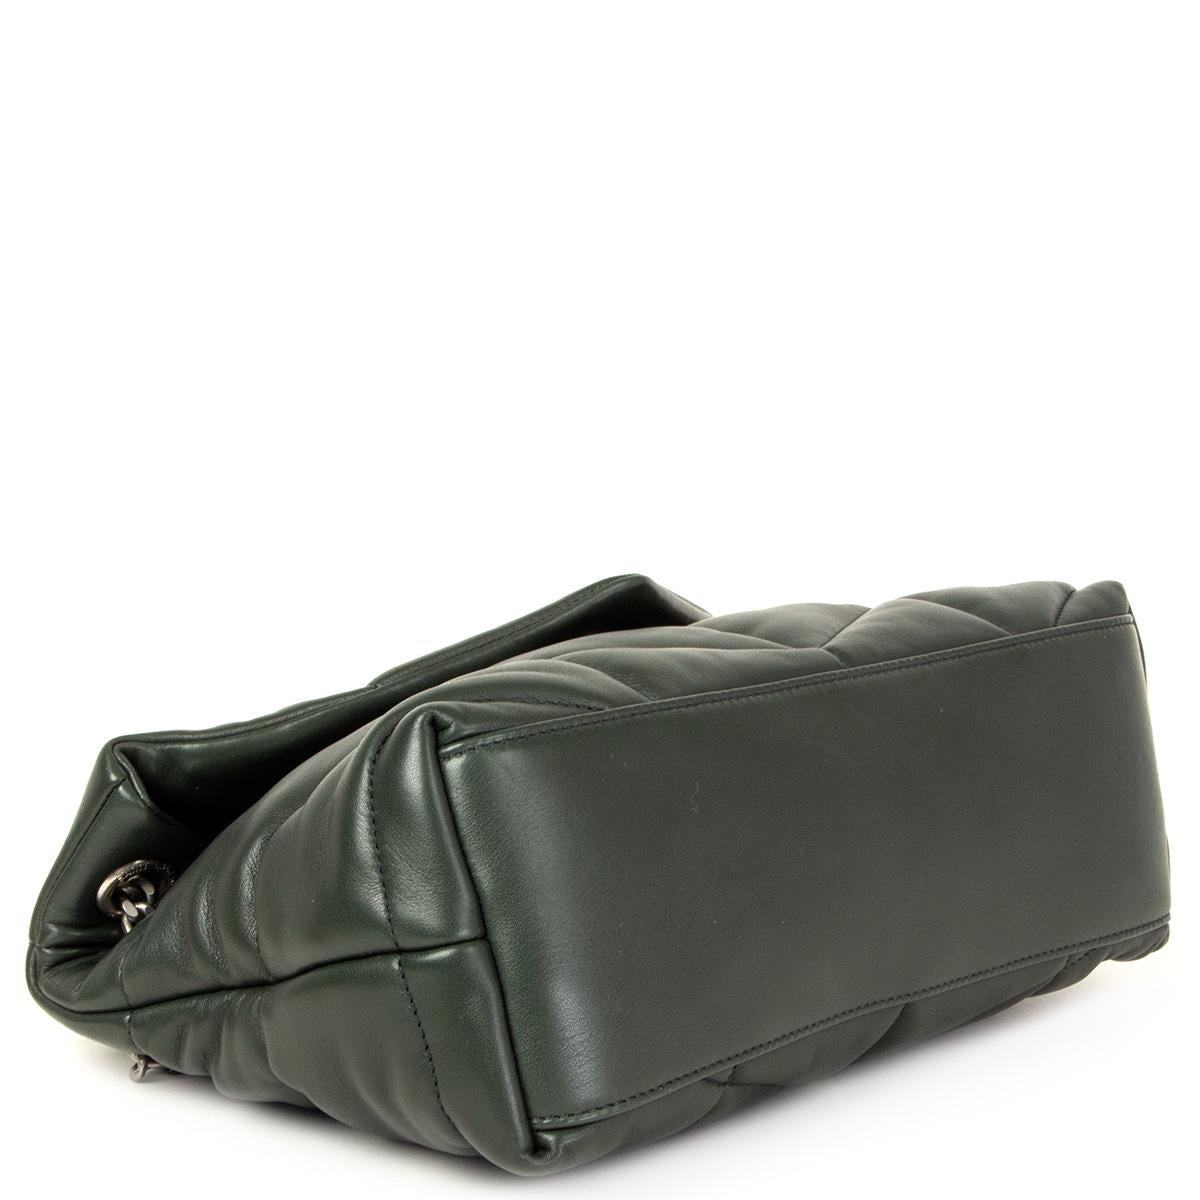 ysl green leather bag